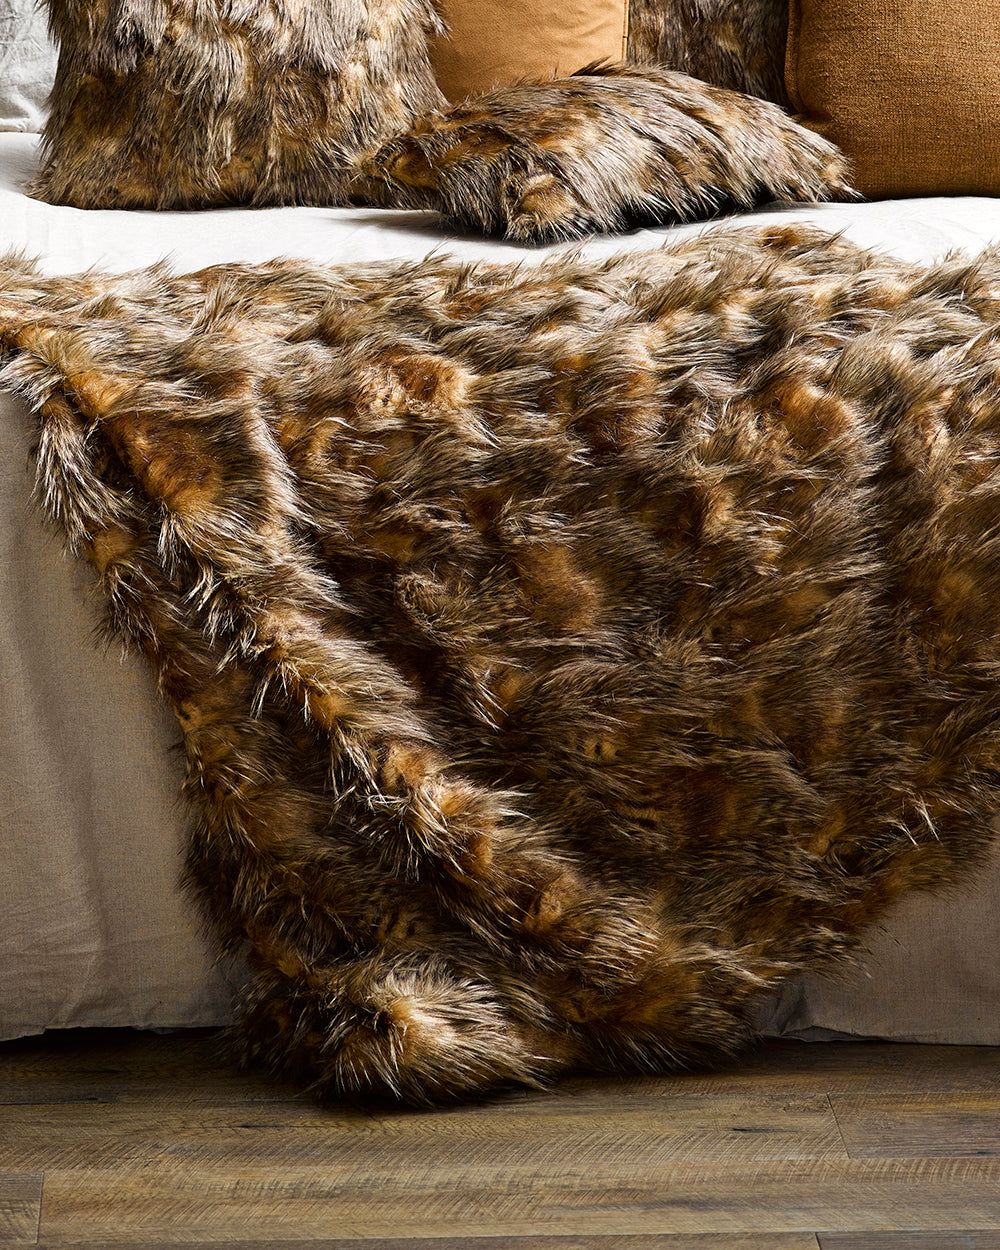 Red Fox imitation faux fur throw from Heirloom Furtex